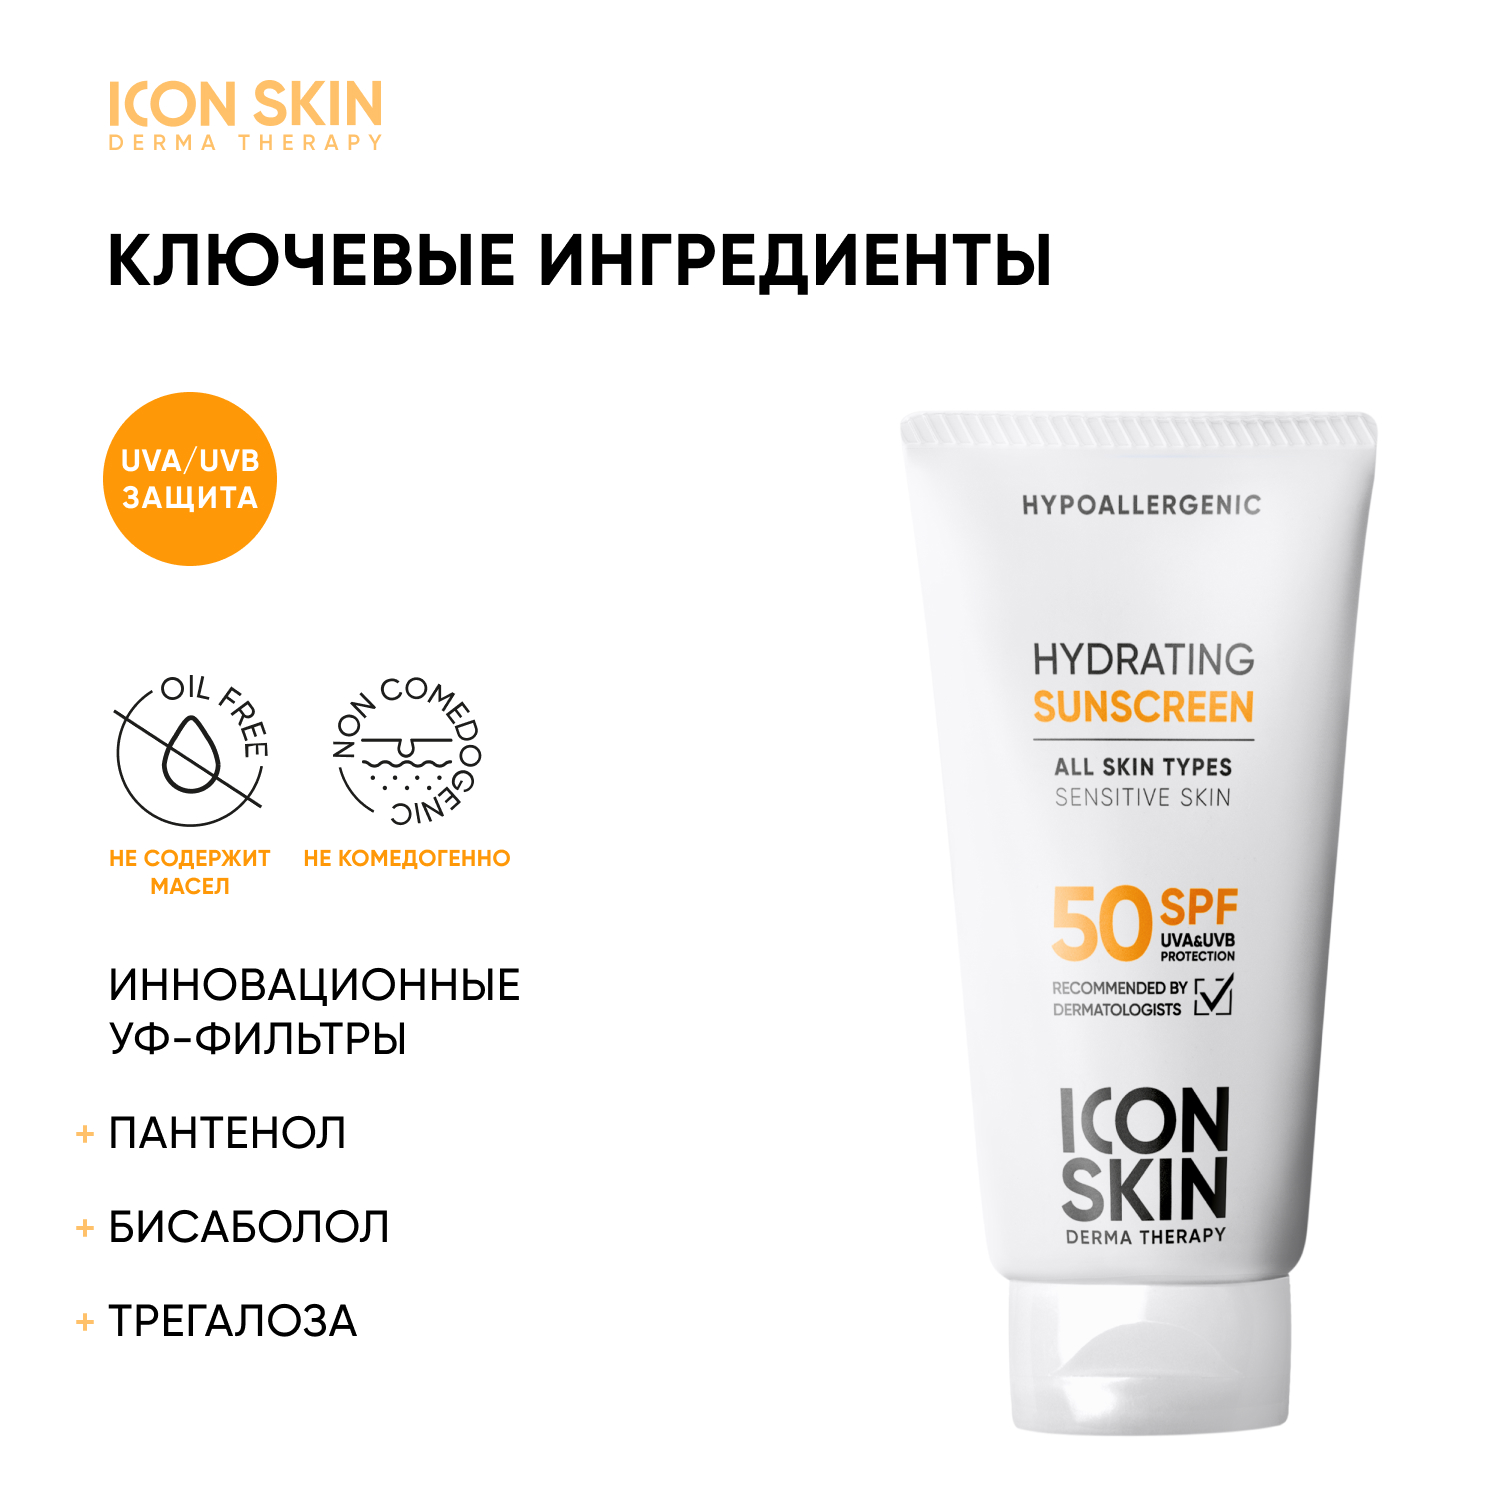 Солнцезащитный крем для лица ICON SKIN SPF 50 увлажняющий для всех типов кожи 50 мл - фото 3